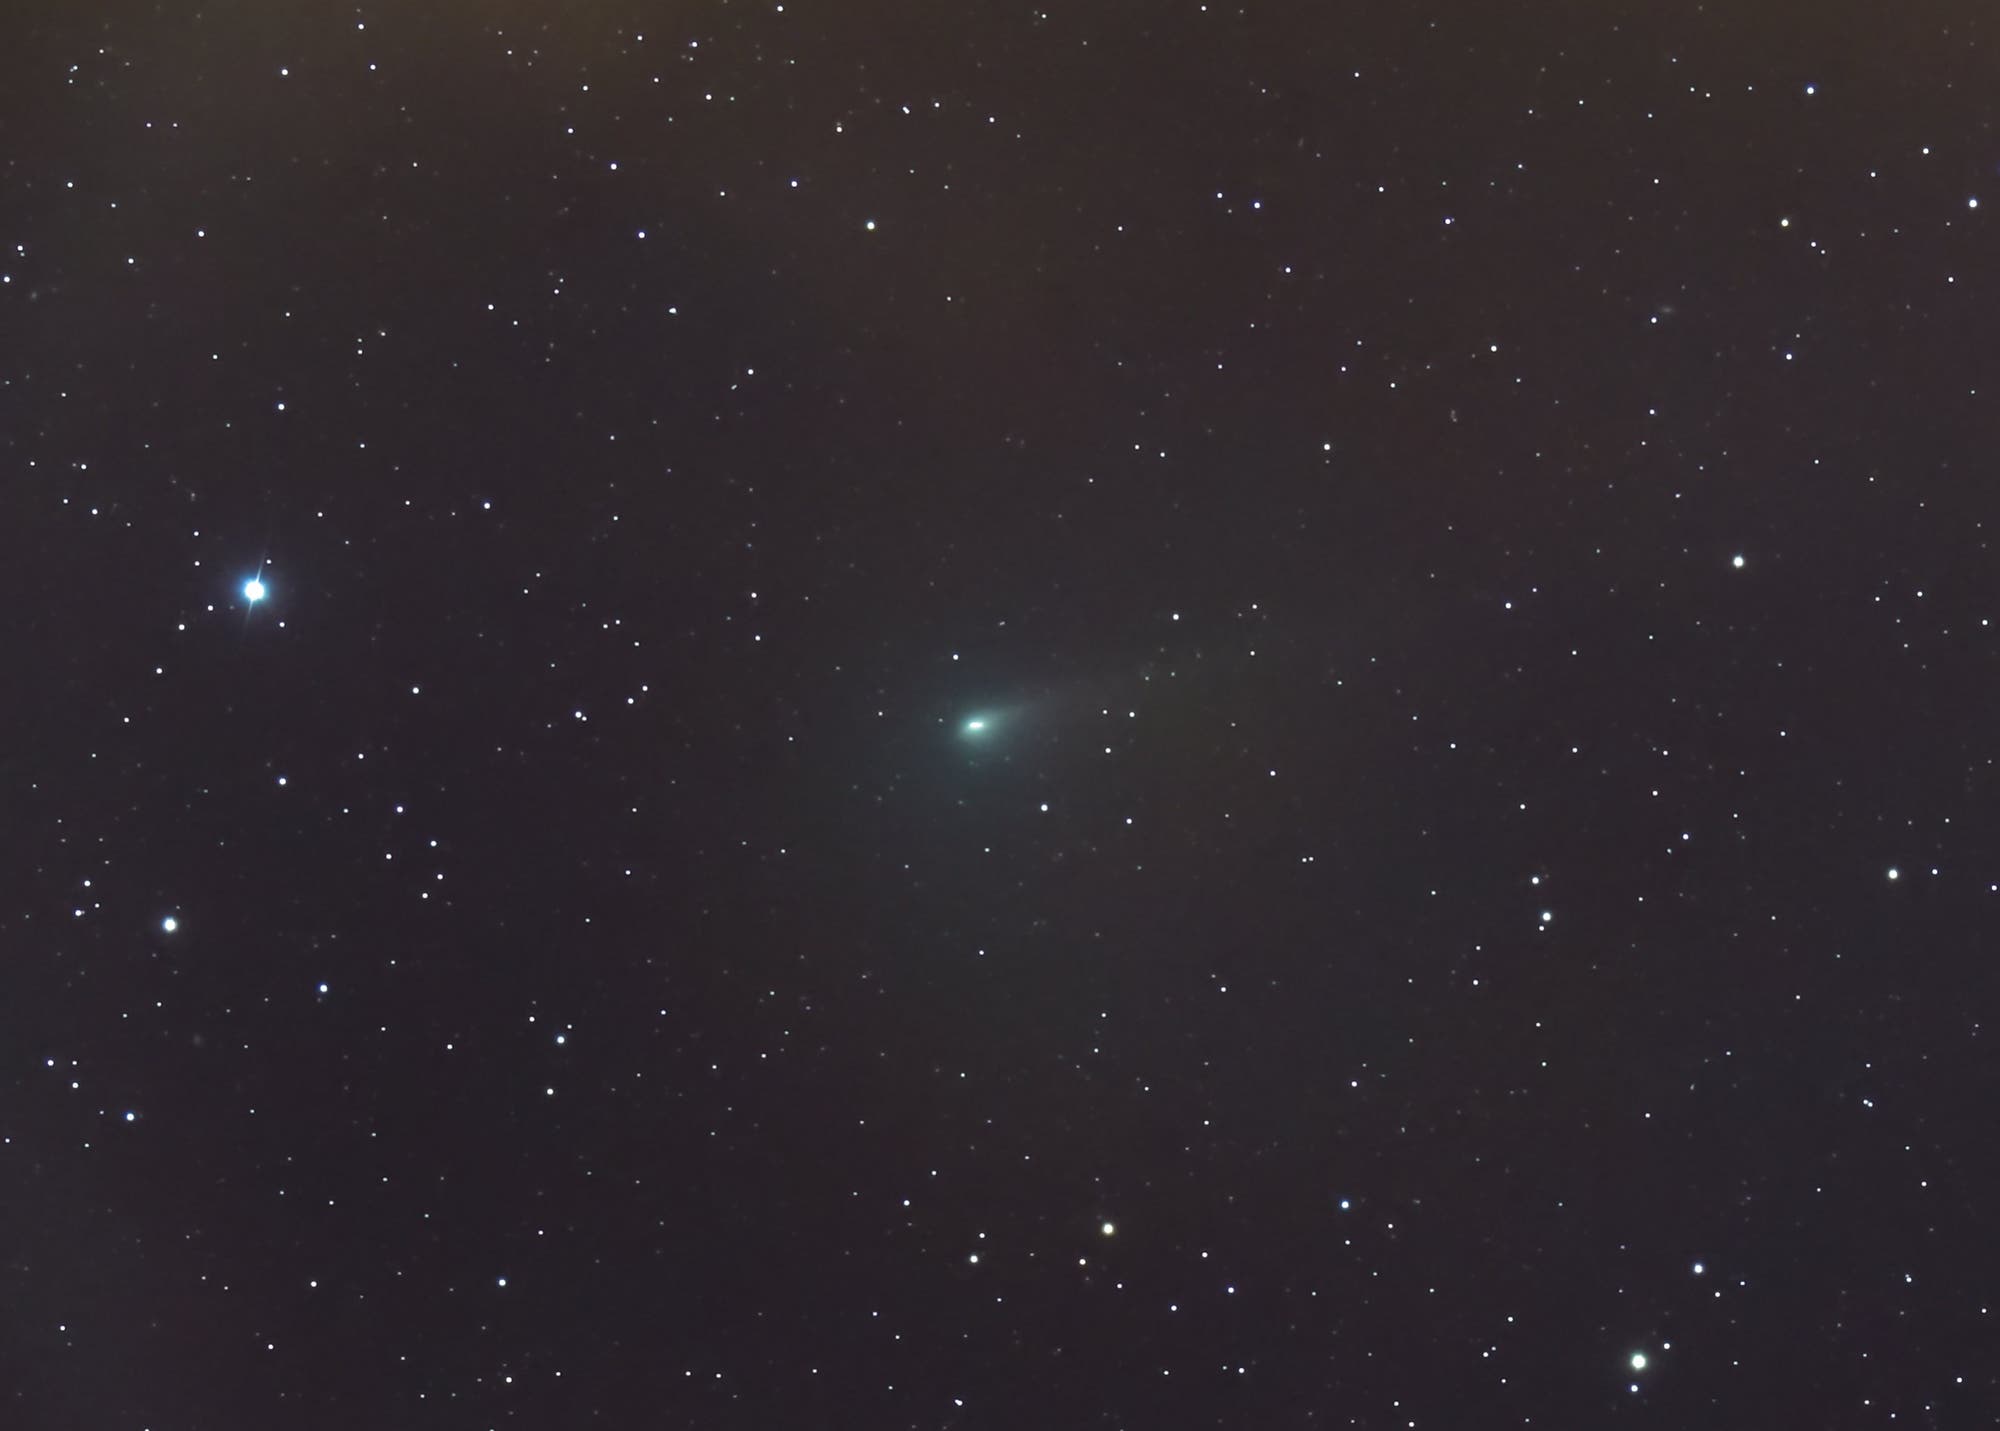 Komet 67P/Tschurjumow-Gerasimenko